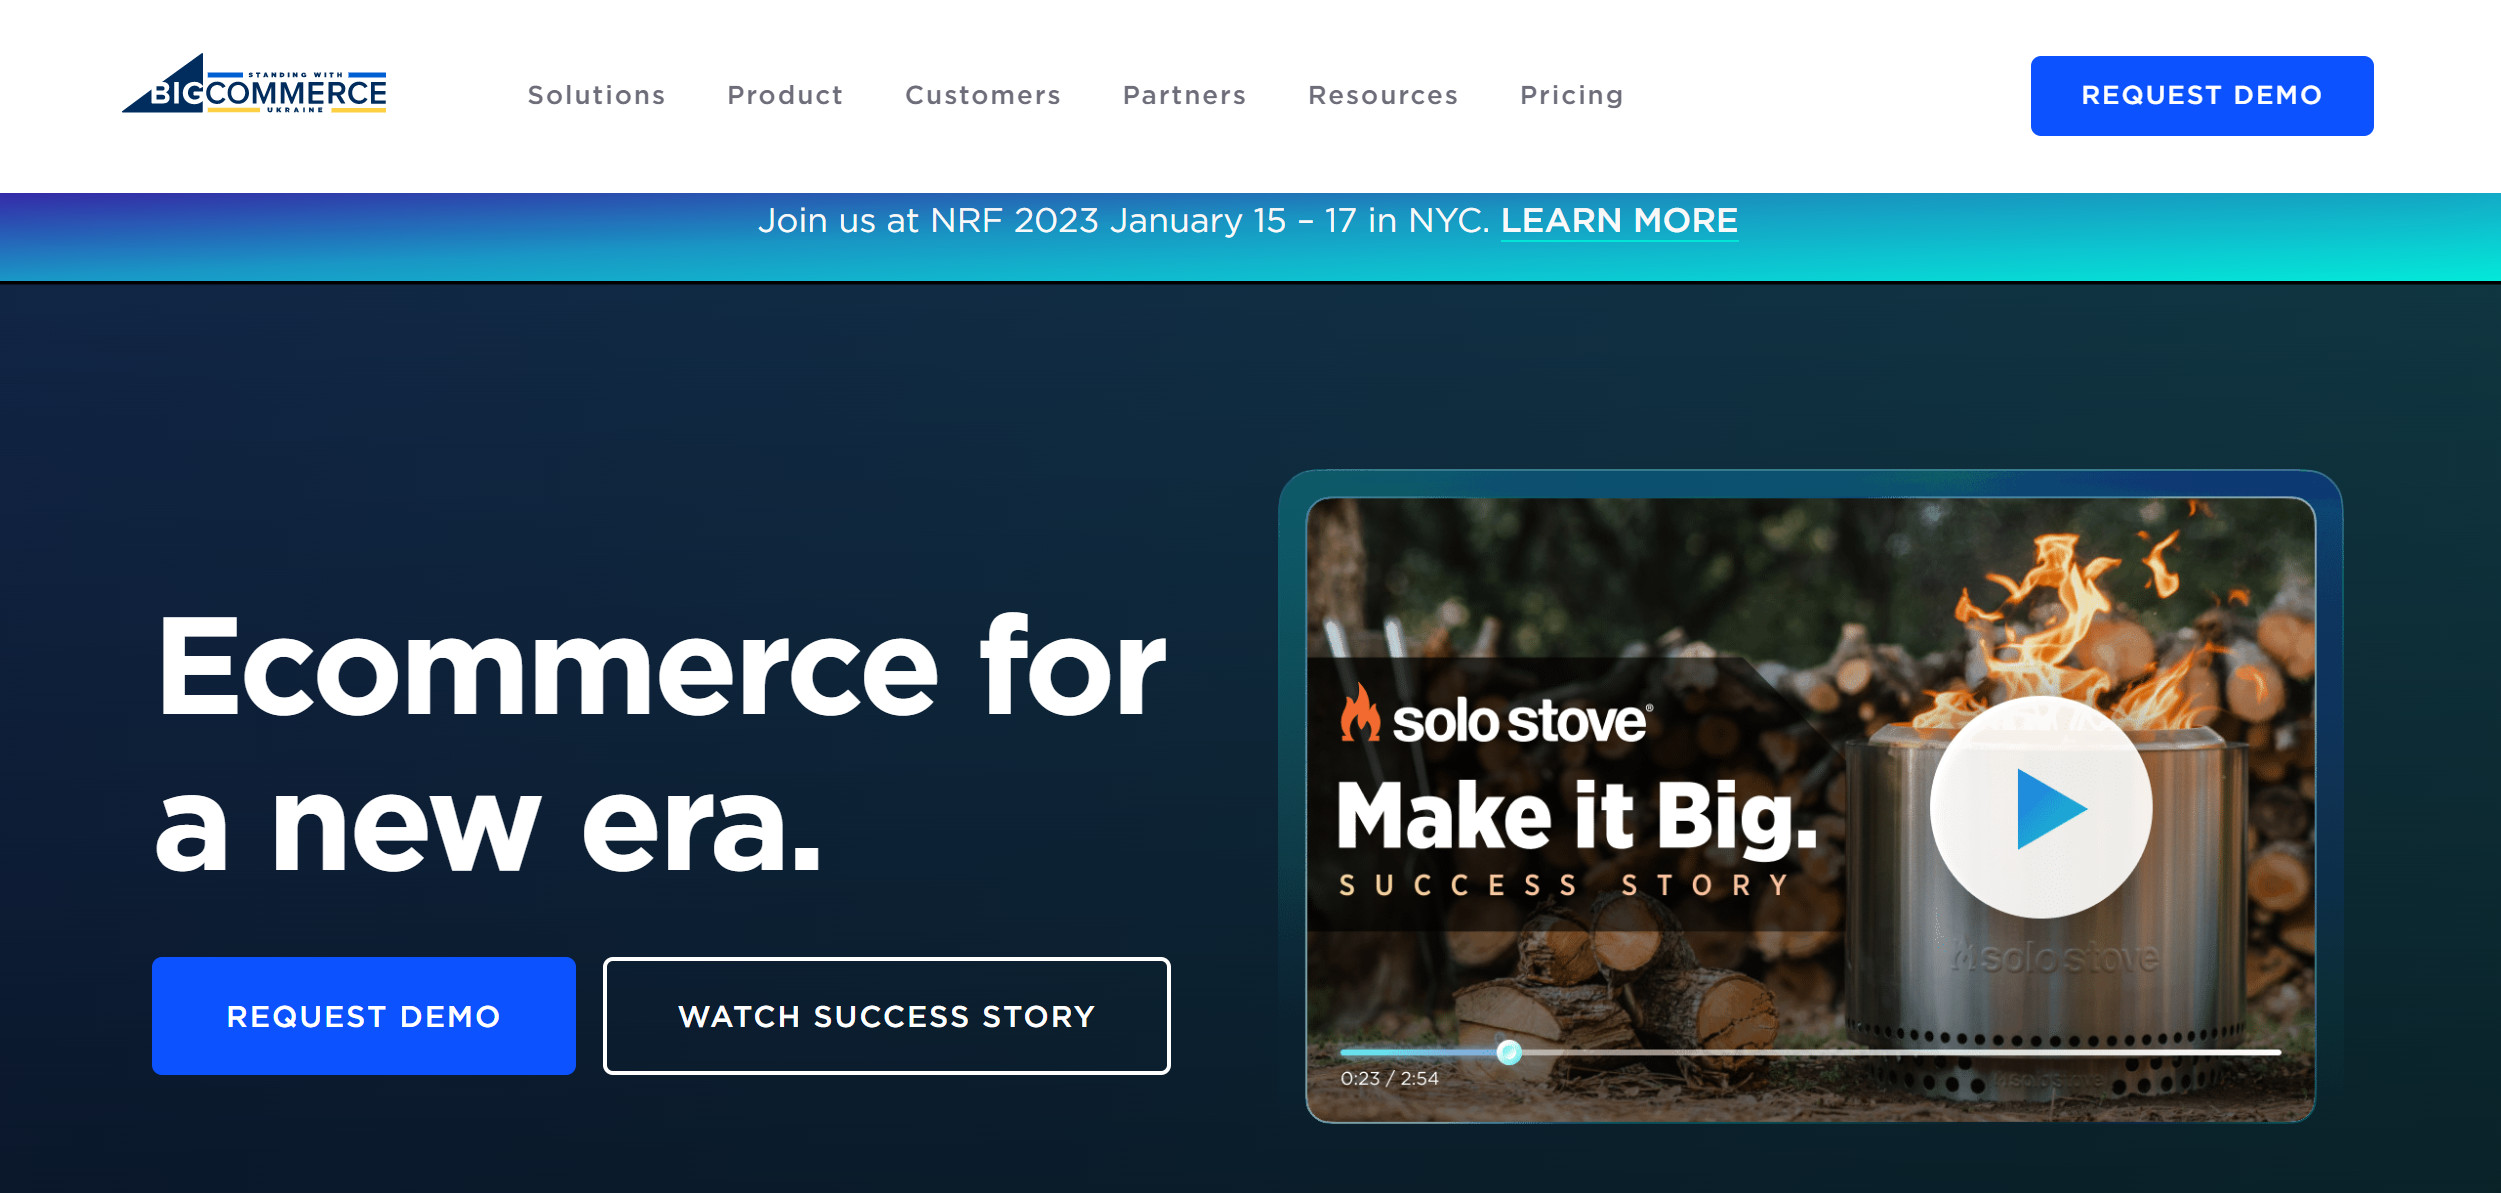 BigCommerce - SaaS platform to build ecommerce website in Singapore